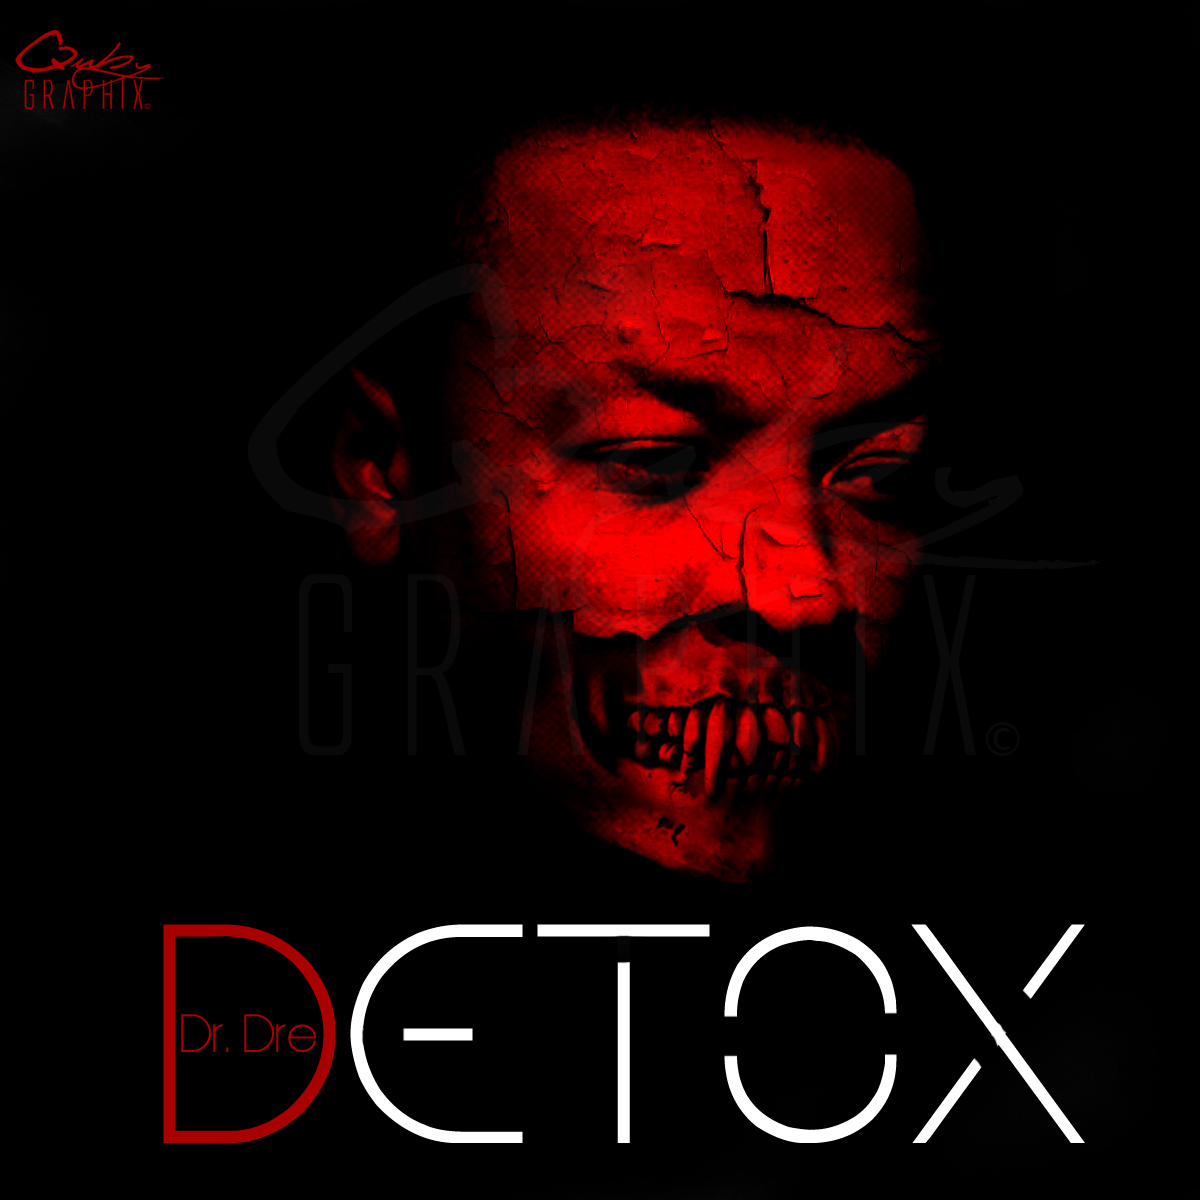 Detox By Dr. Dre Dr.+Dre+DETOX+by+Quby+GRAPHIX+PNG